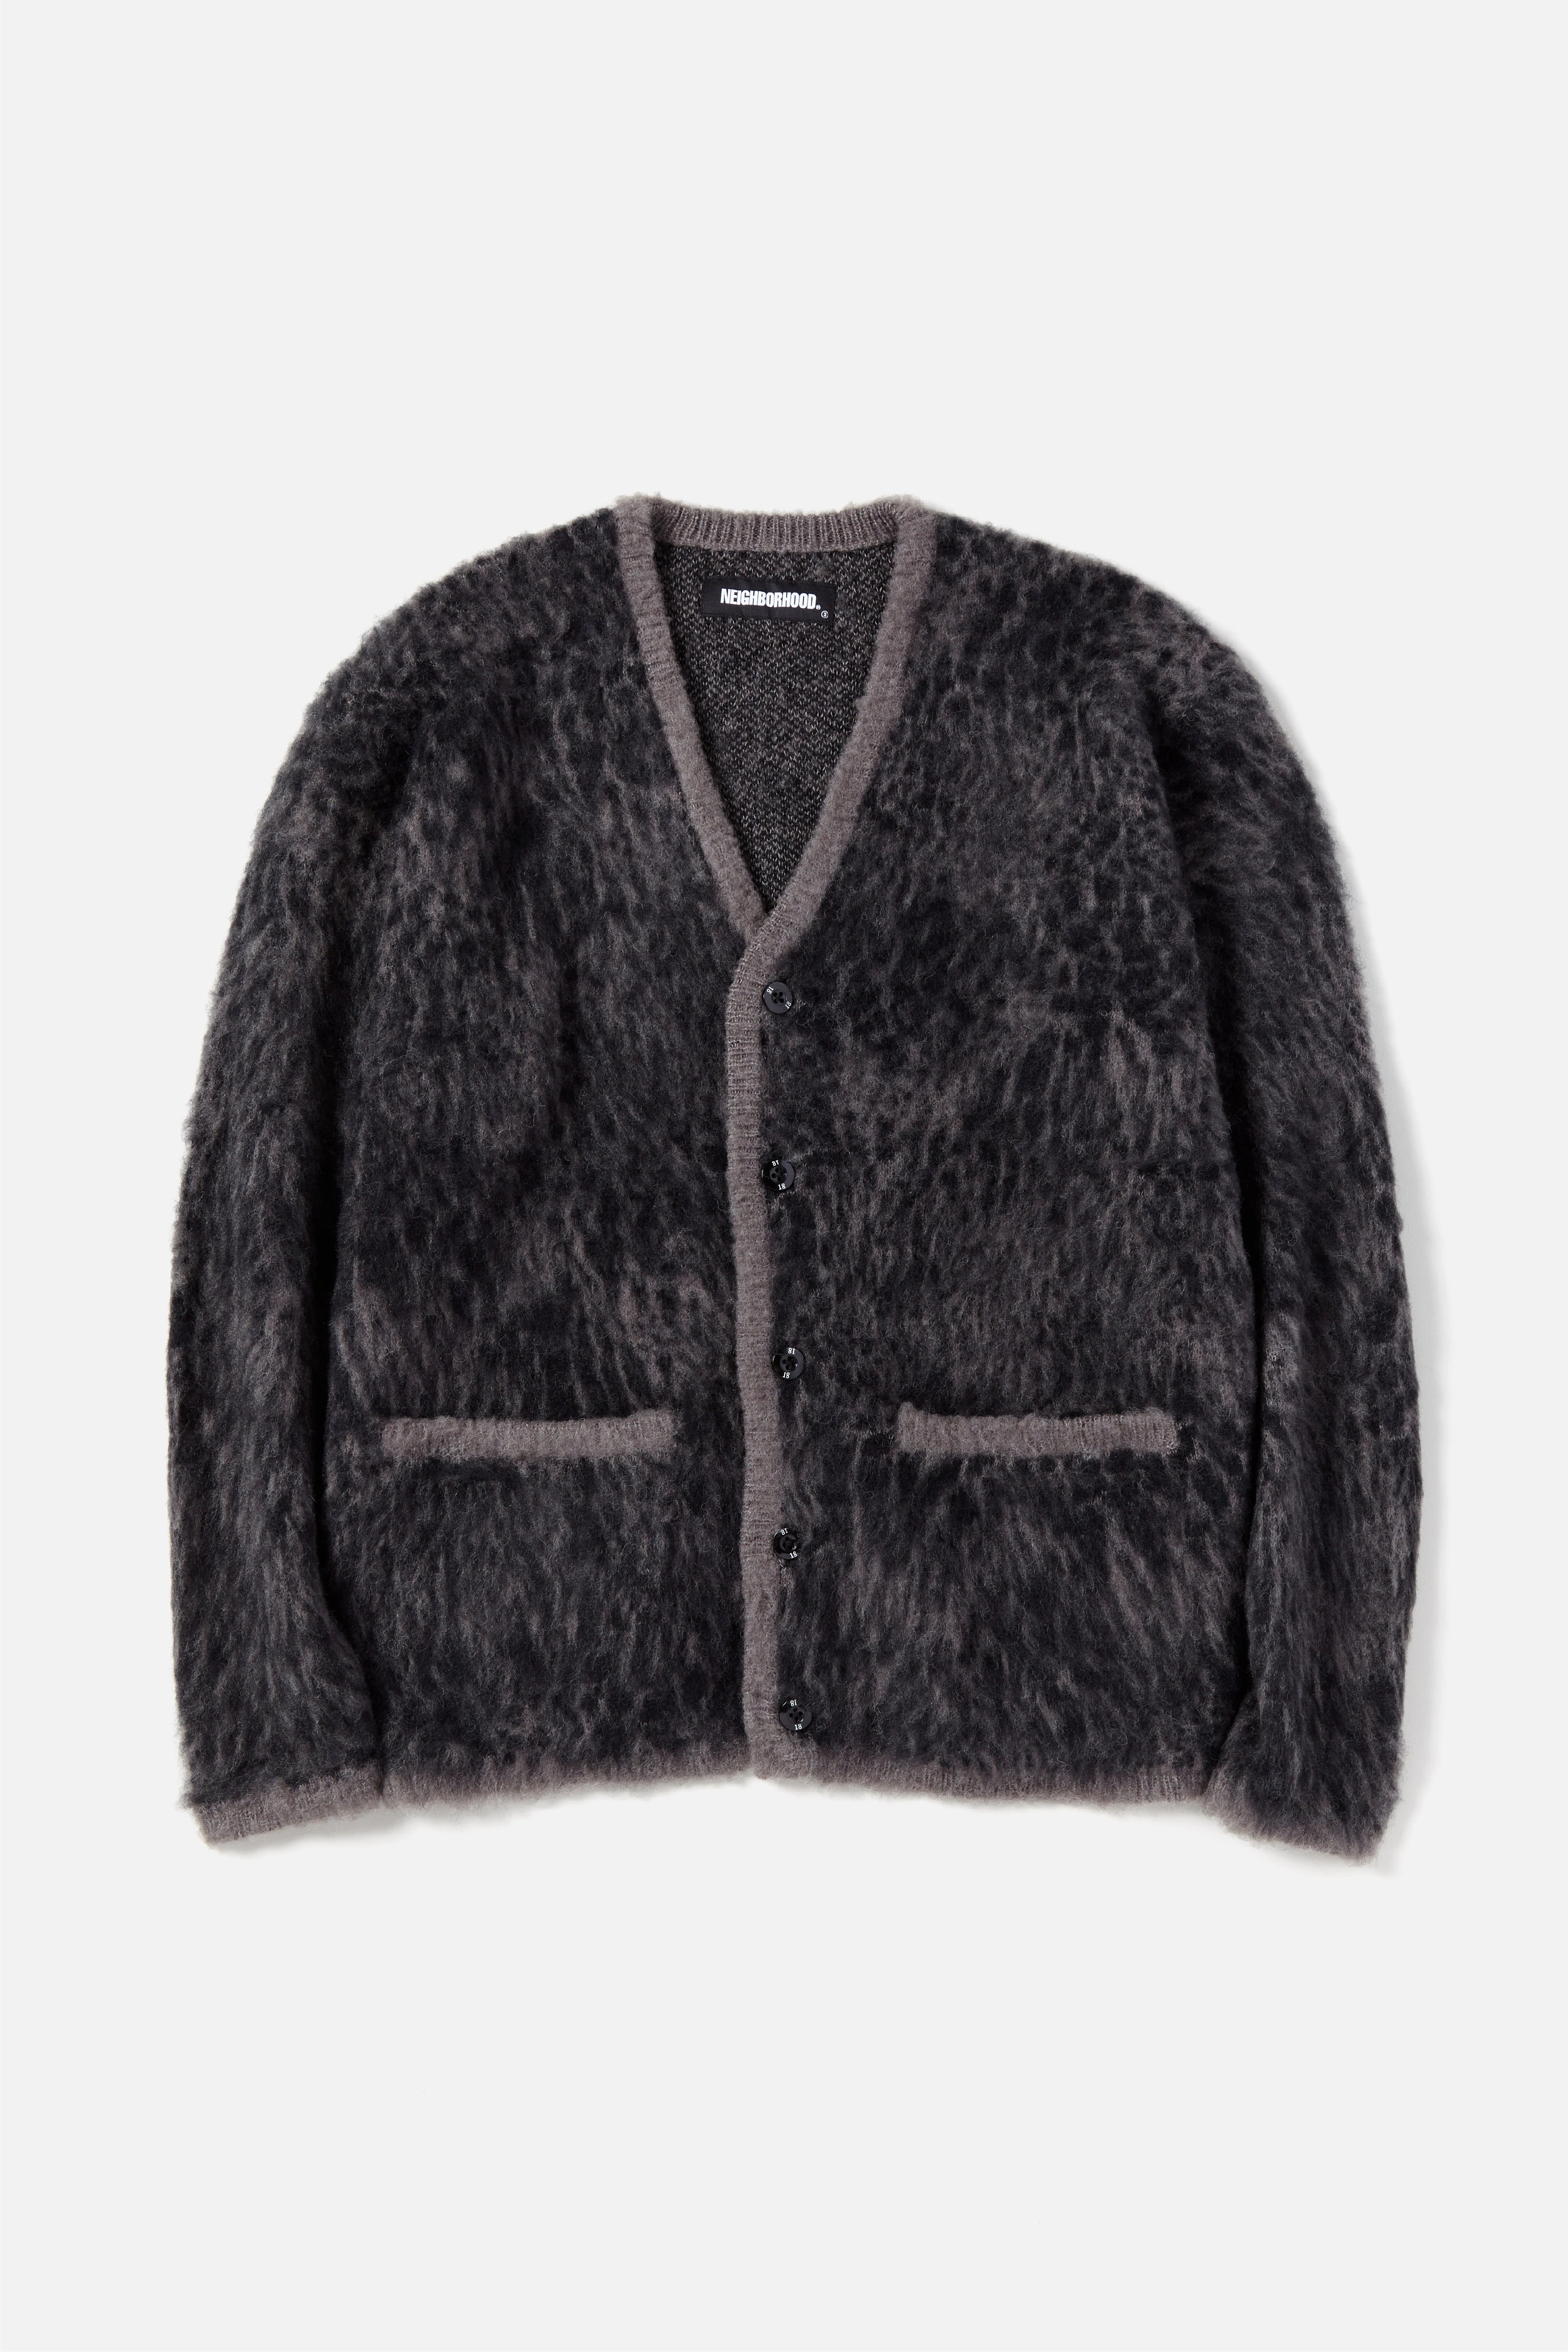 Selectshop FRAME - NEIGHBORHOOD Mohair Cardigan / AN-Knit . LS Sweats-knits Dubai